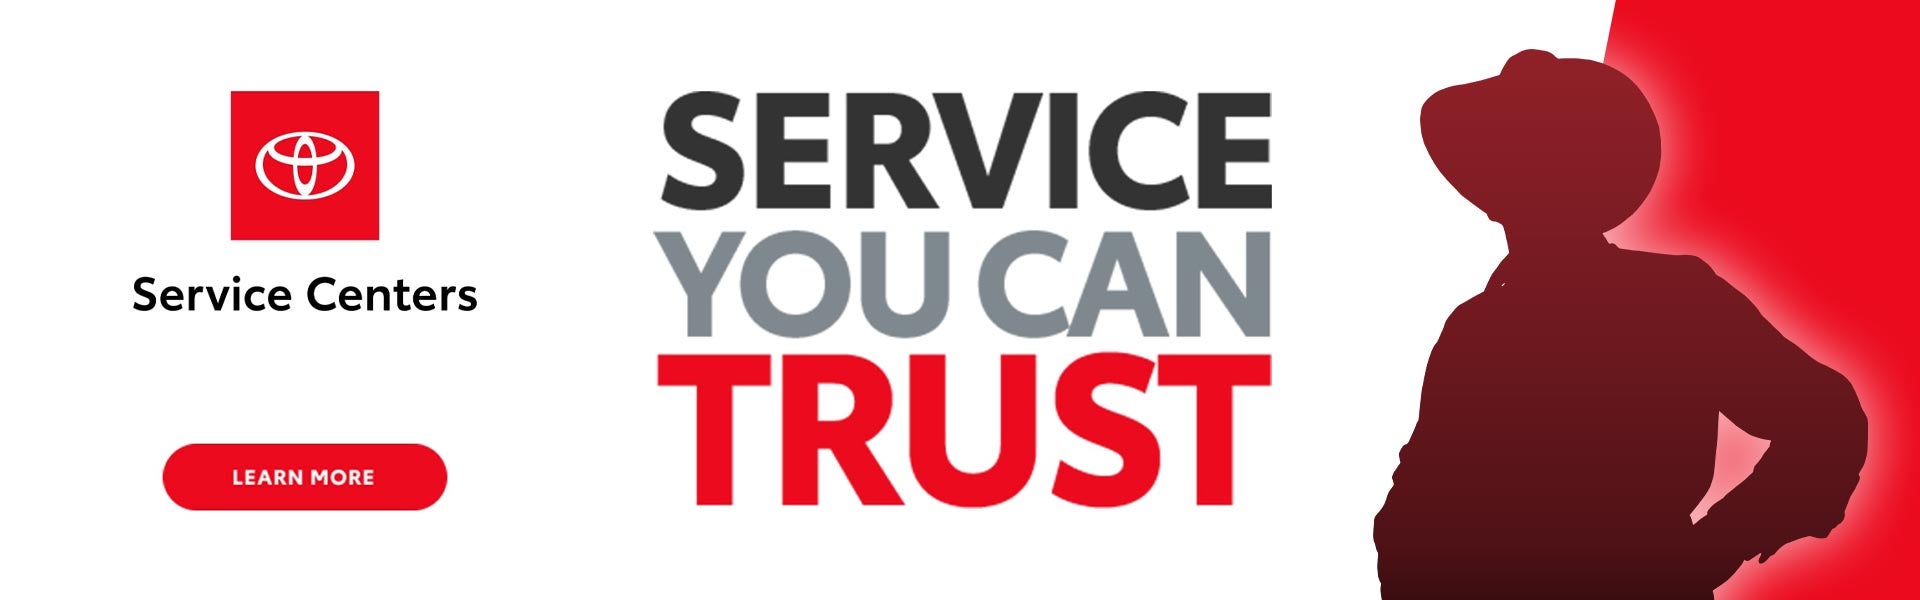 Earnhardt Toyota Service Centers - Service you can TRUST